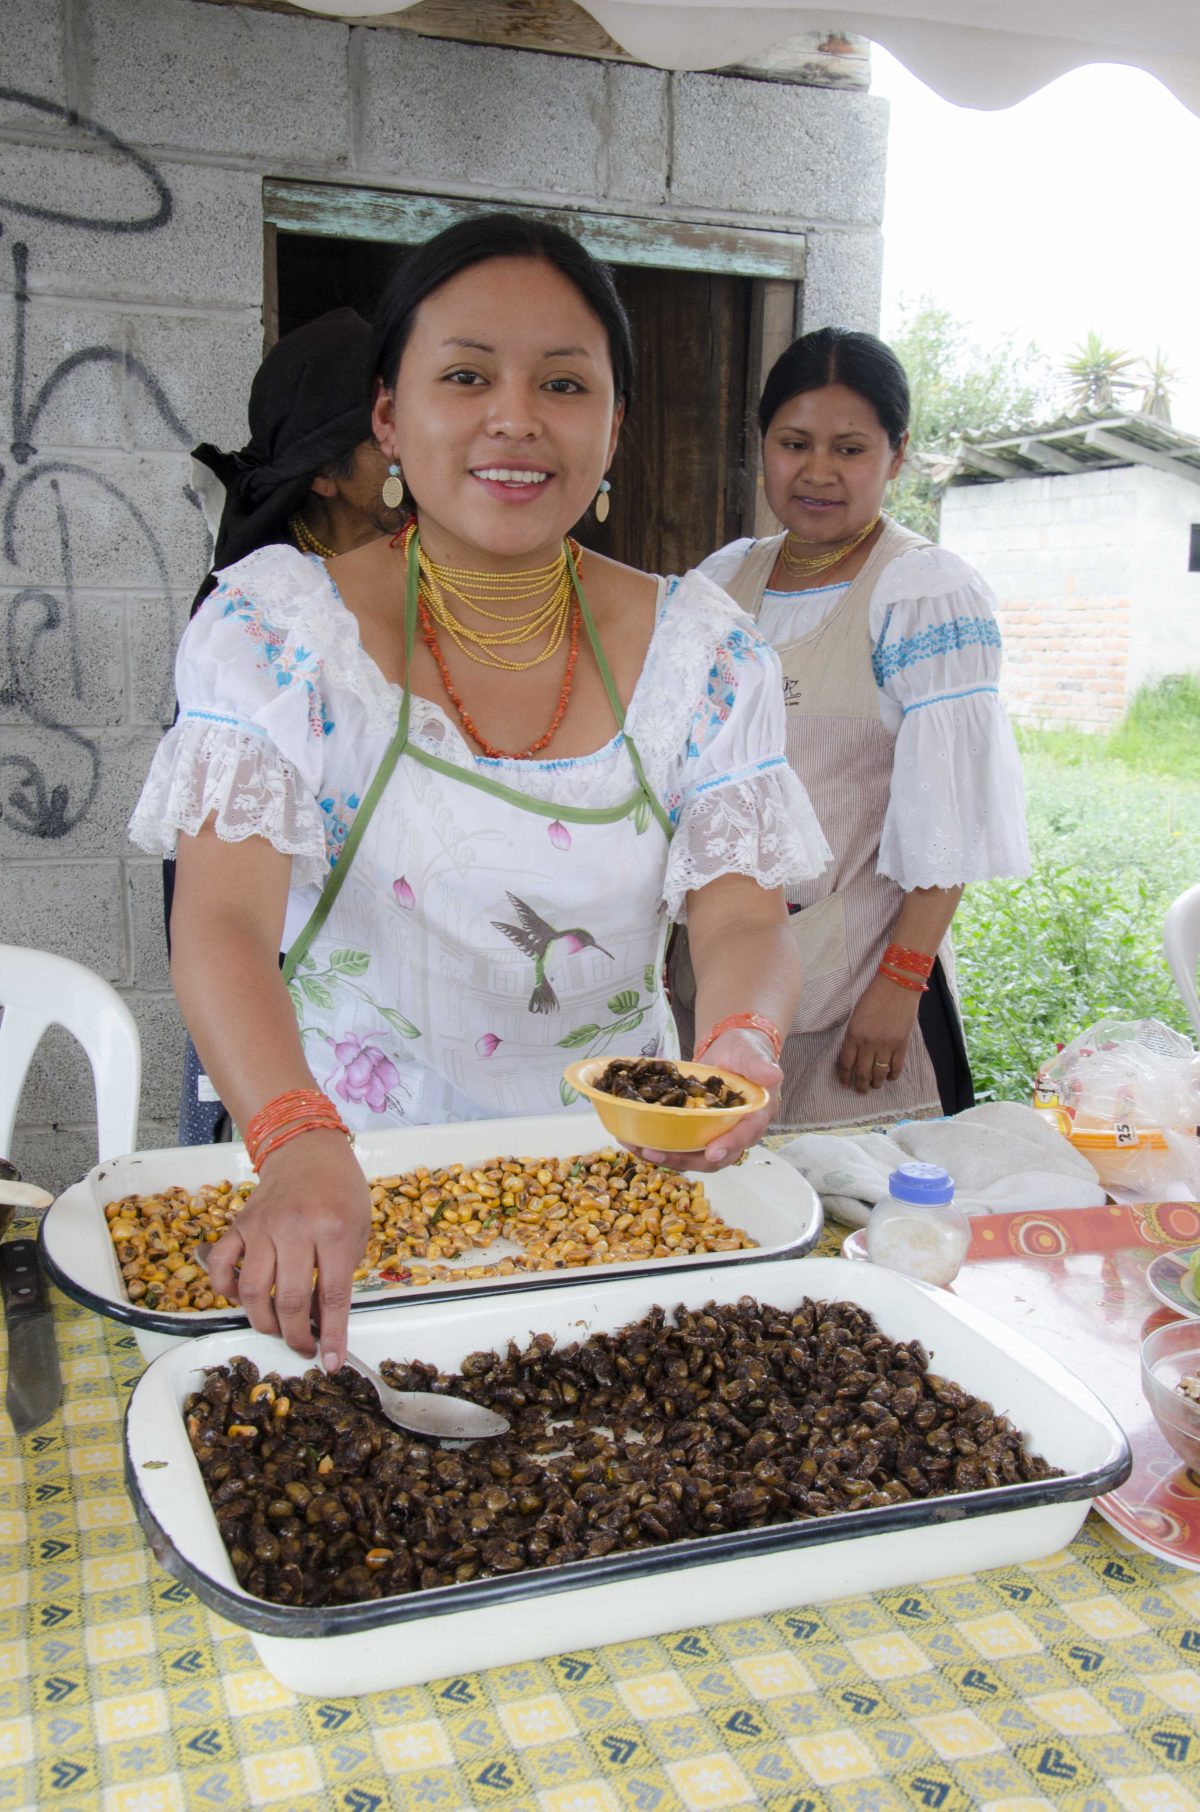 Catzos, or beetles, served in Peguche, Ecuador| ©Angela Drake